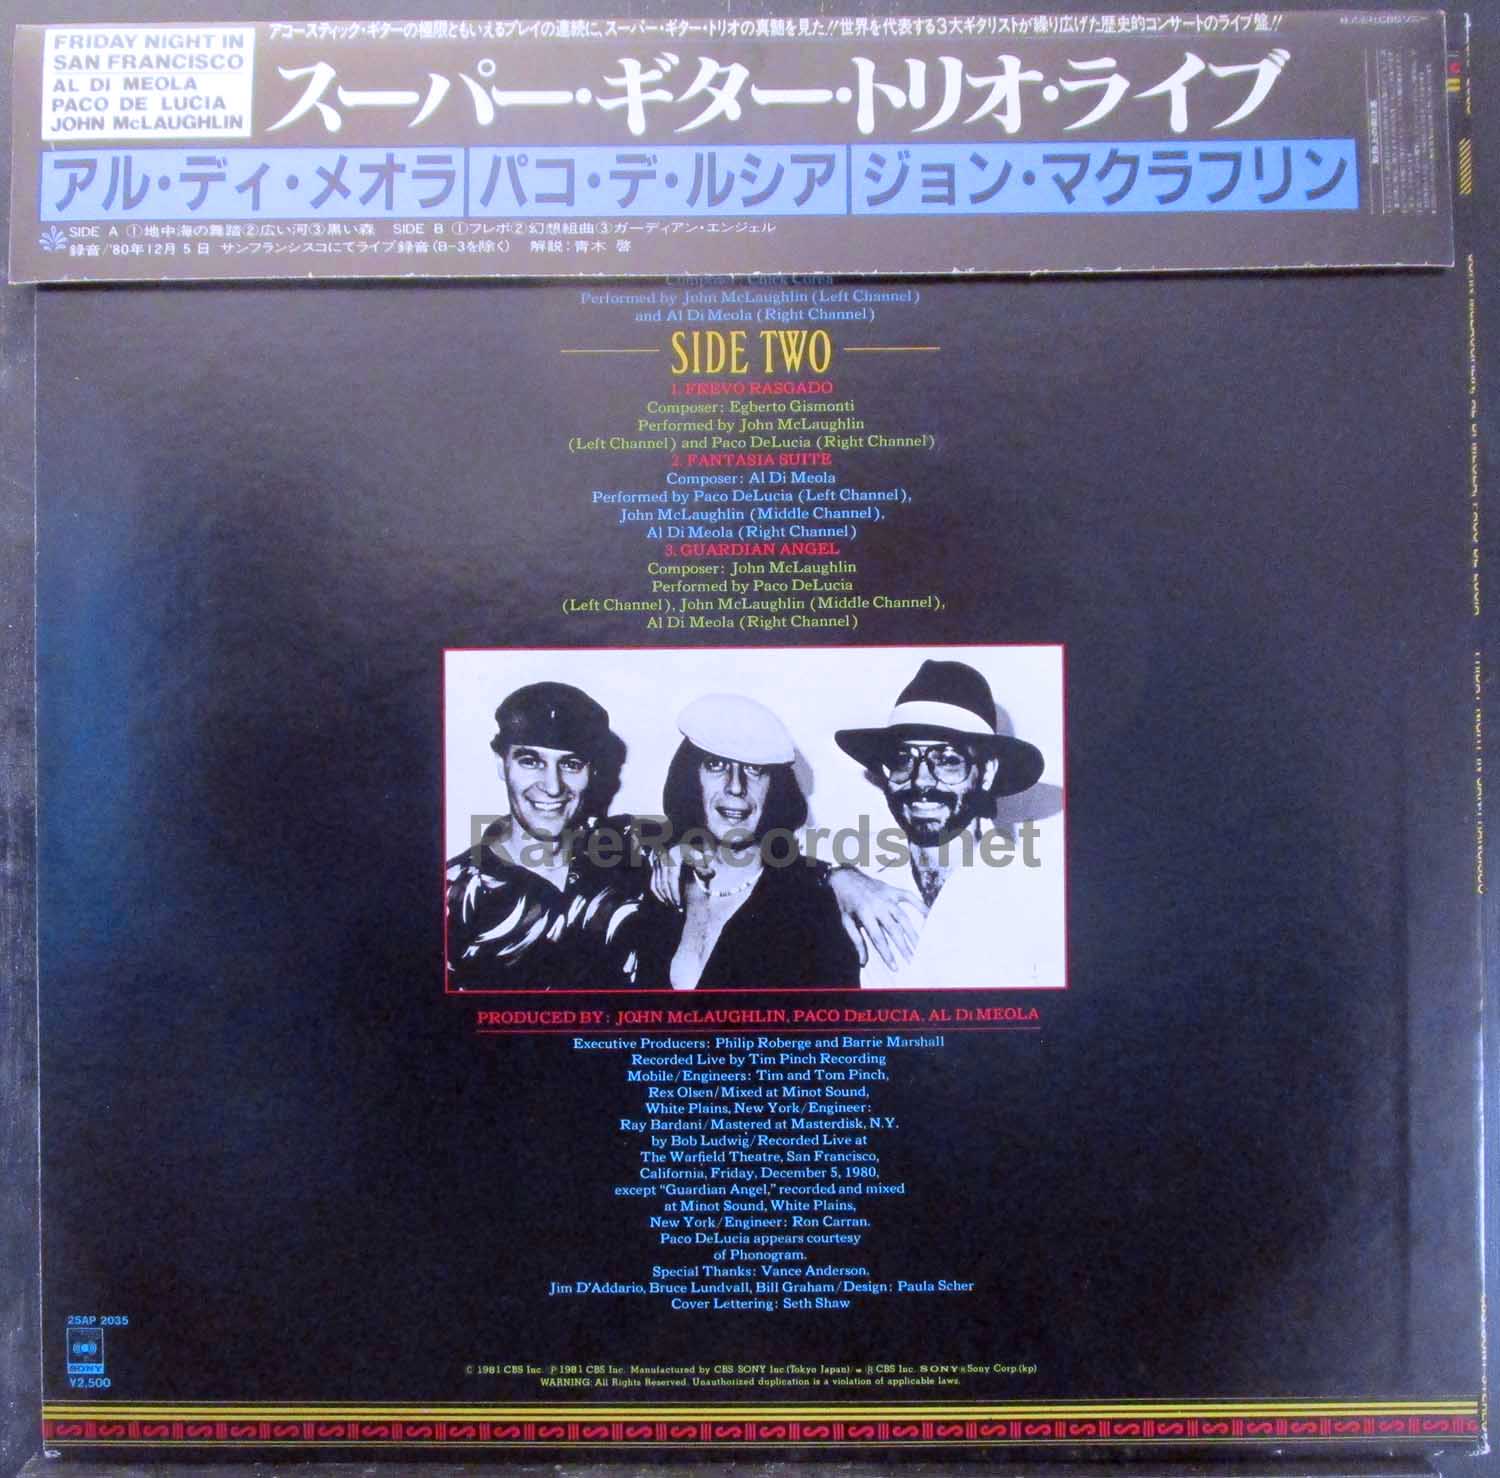 Al DiMeola/John McLaughlin - Friday Night in San Francisco Japan LP with obi